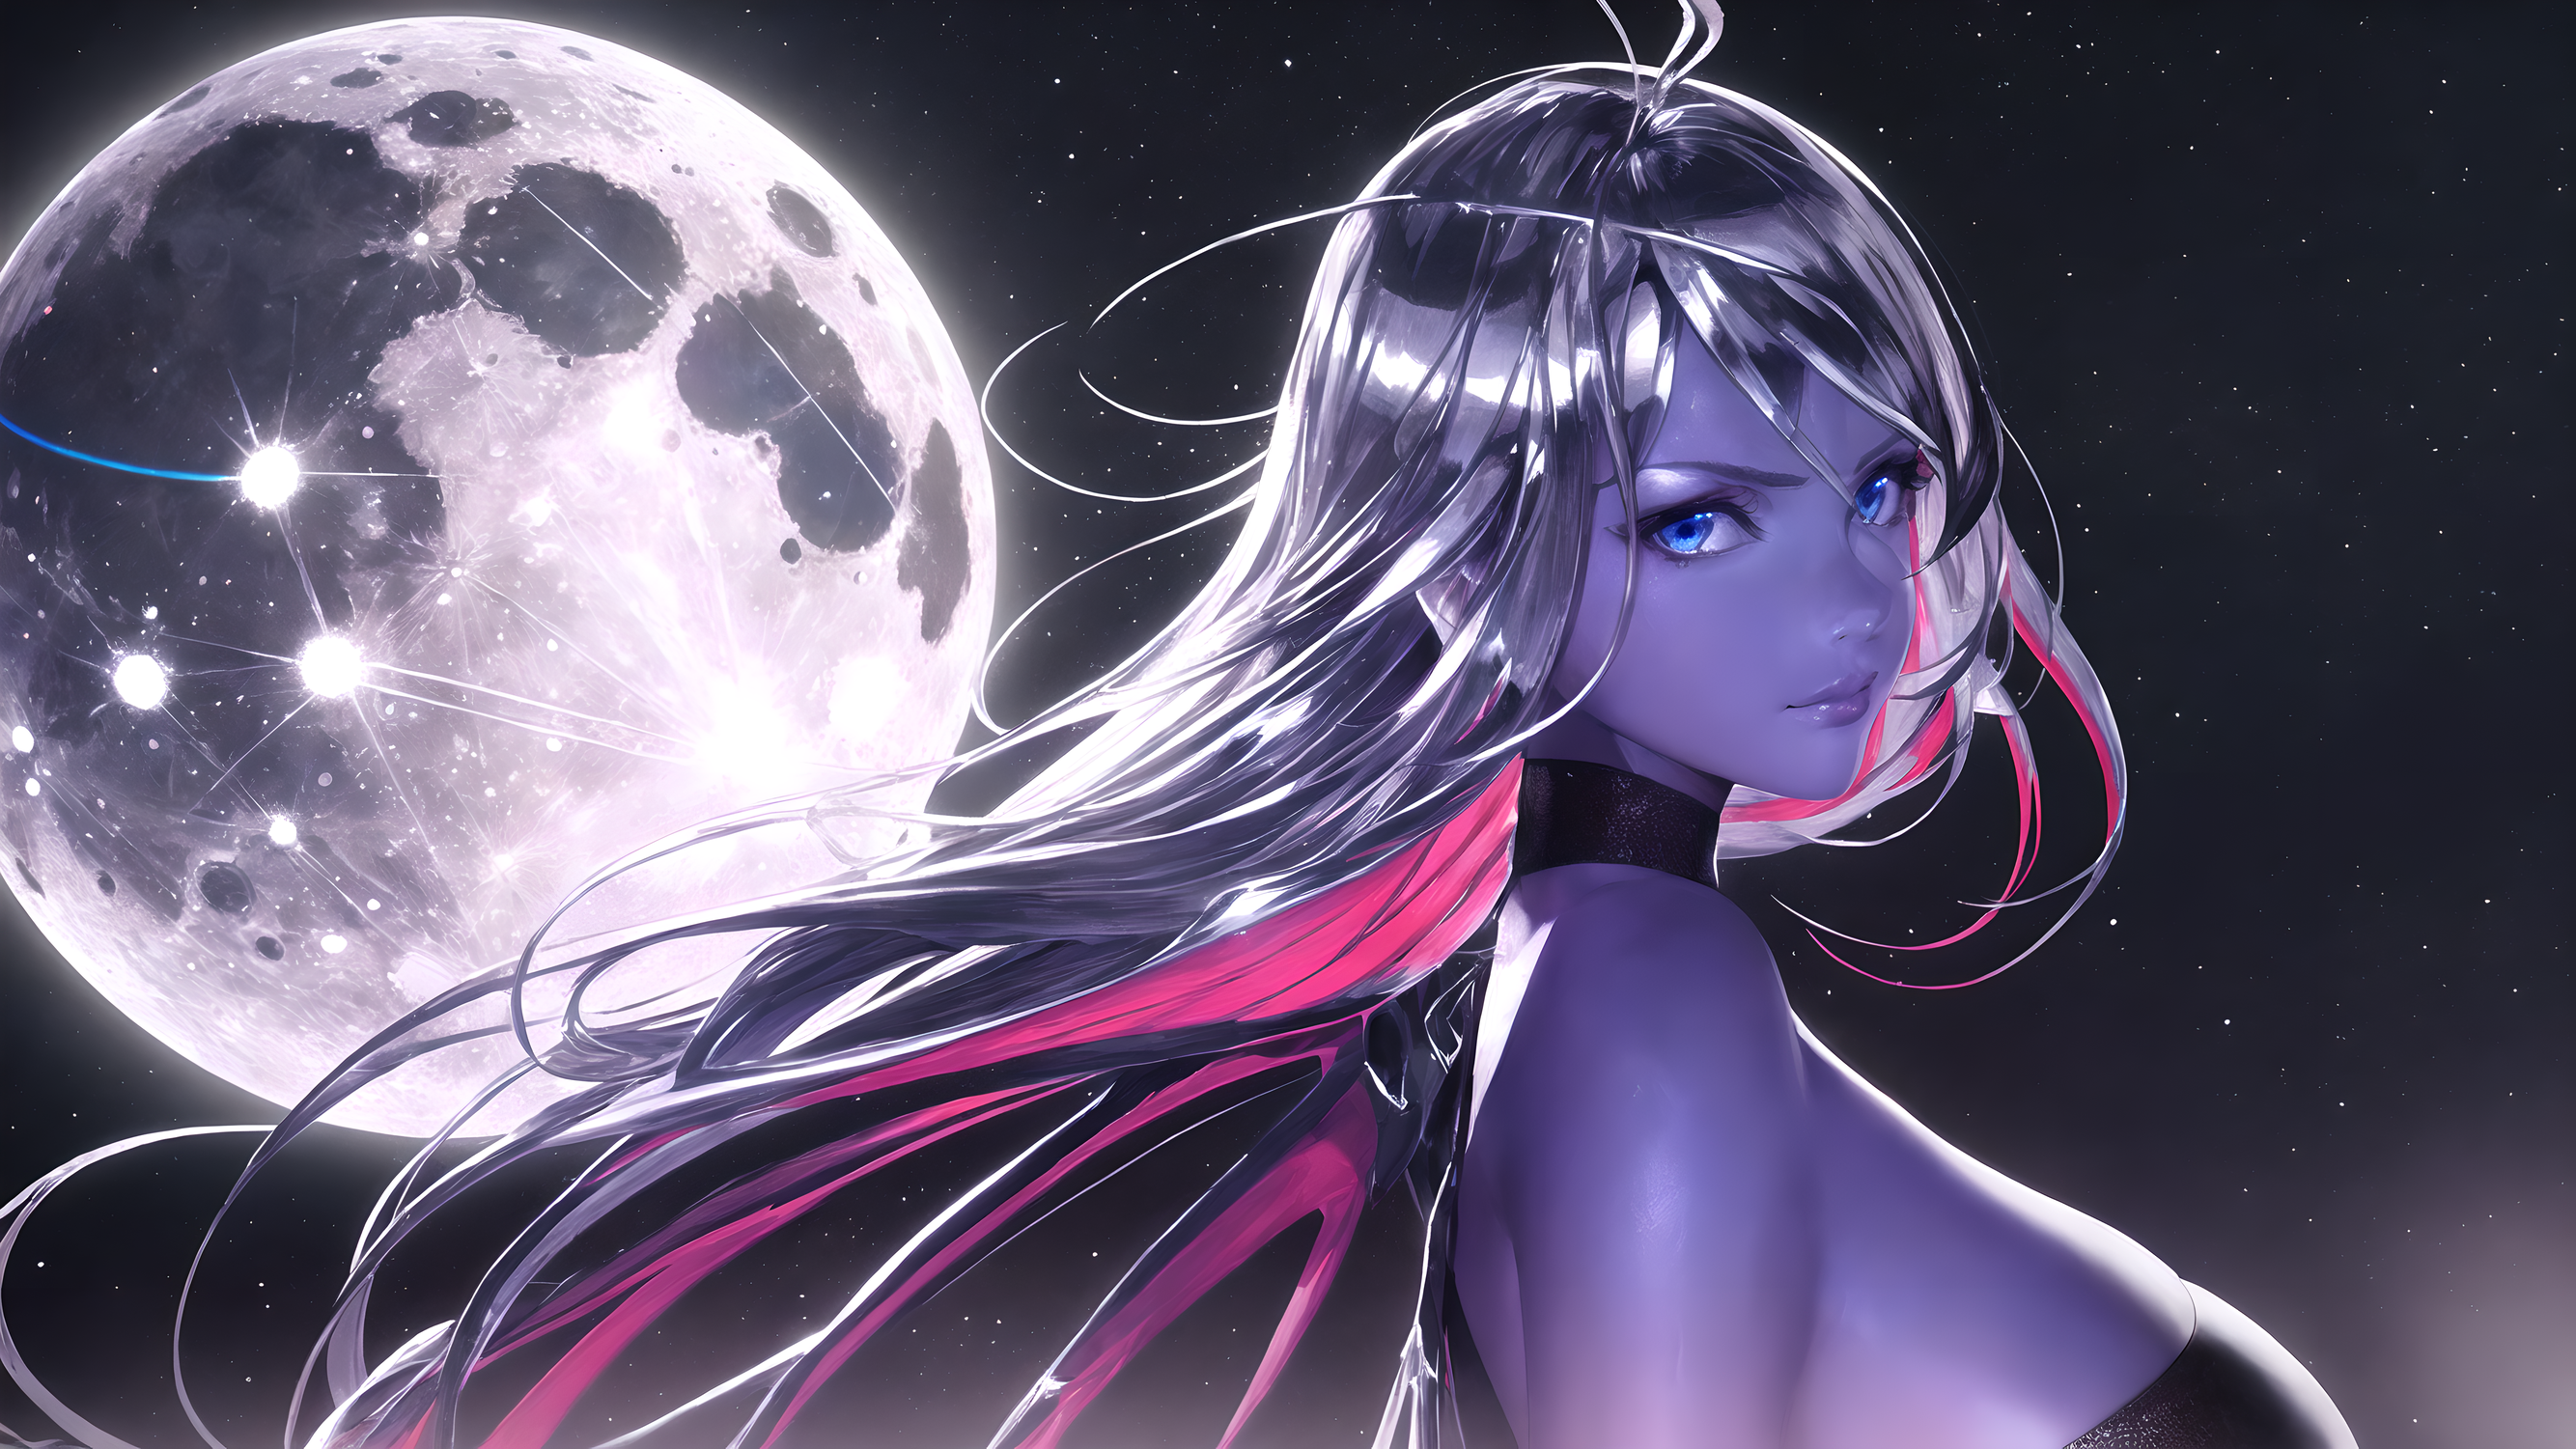 Anime Galactic Beautiful Girl 107 by i-LoveFantasy on DeviantArt